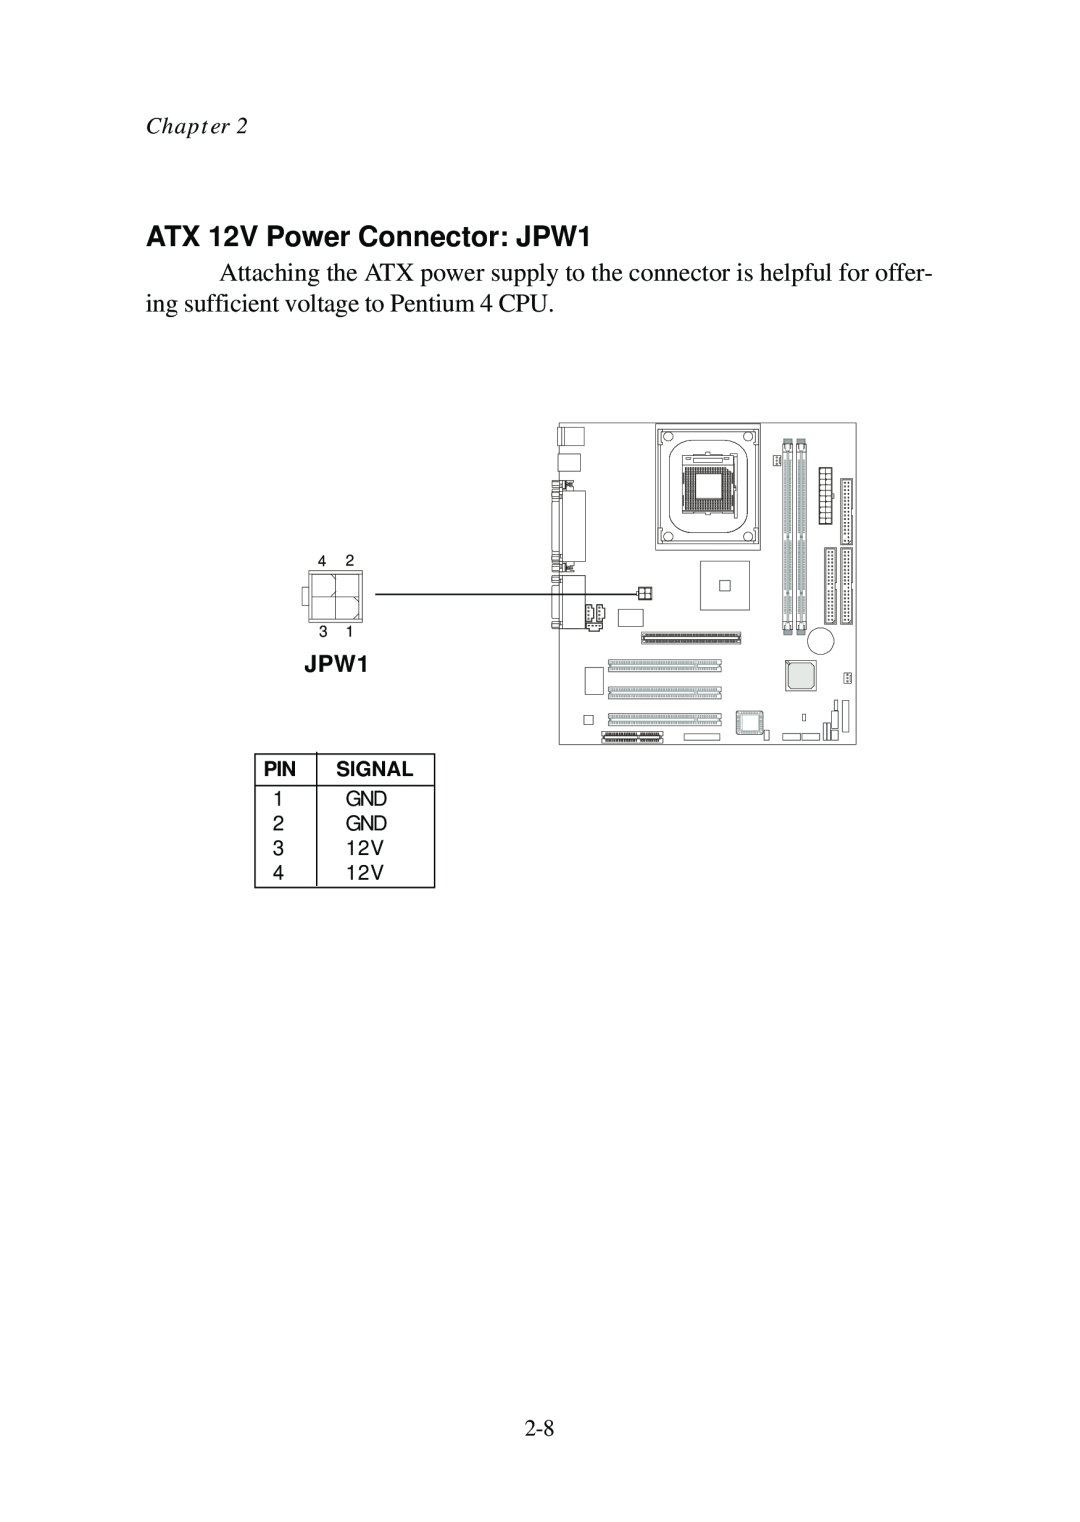 Premio Computer Aries/Centella manual ATX 12V Power Connector JPW1, Chapter 